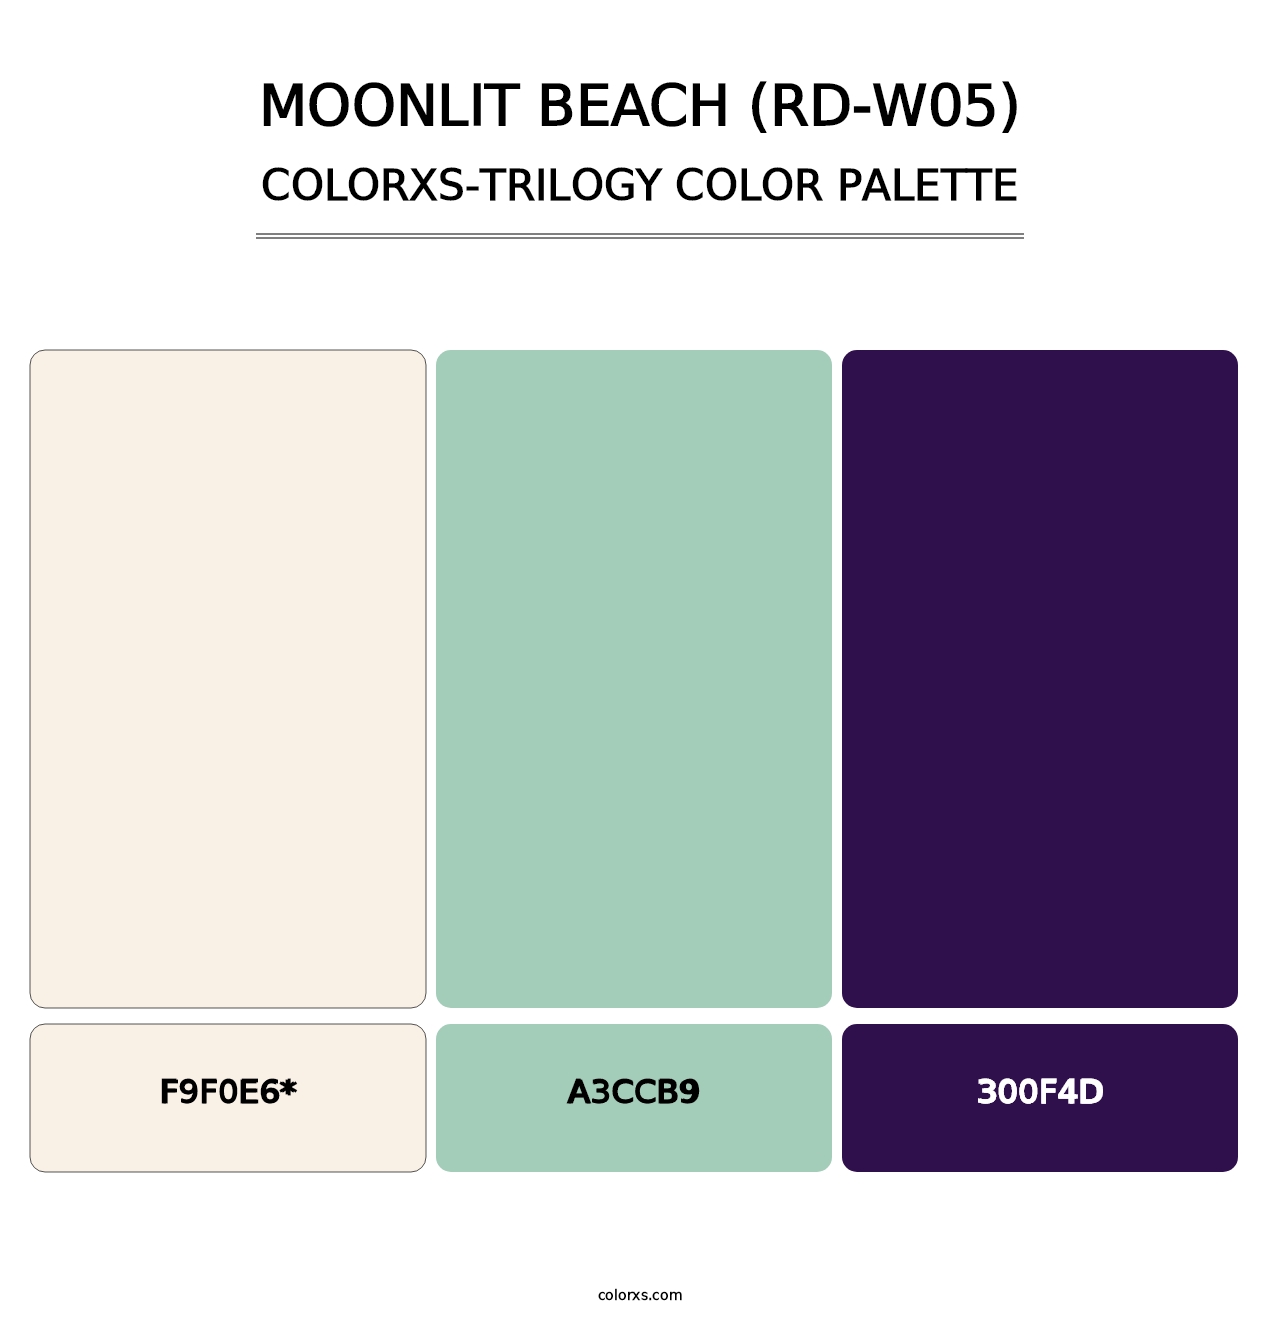 Moonlit Beach (RD-W05) - Colorxs Trilogy Palette